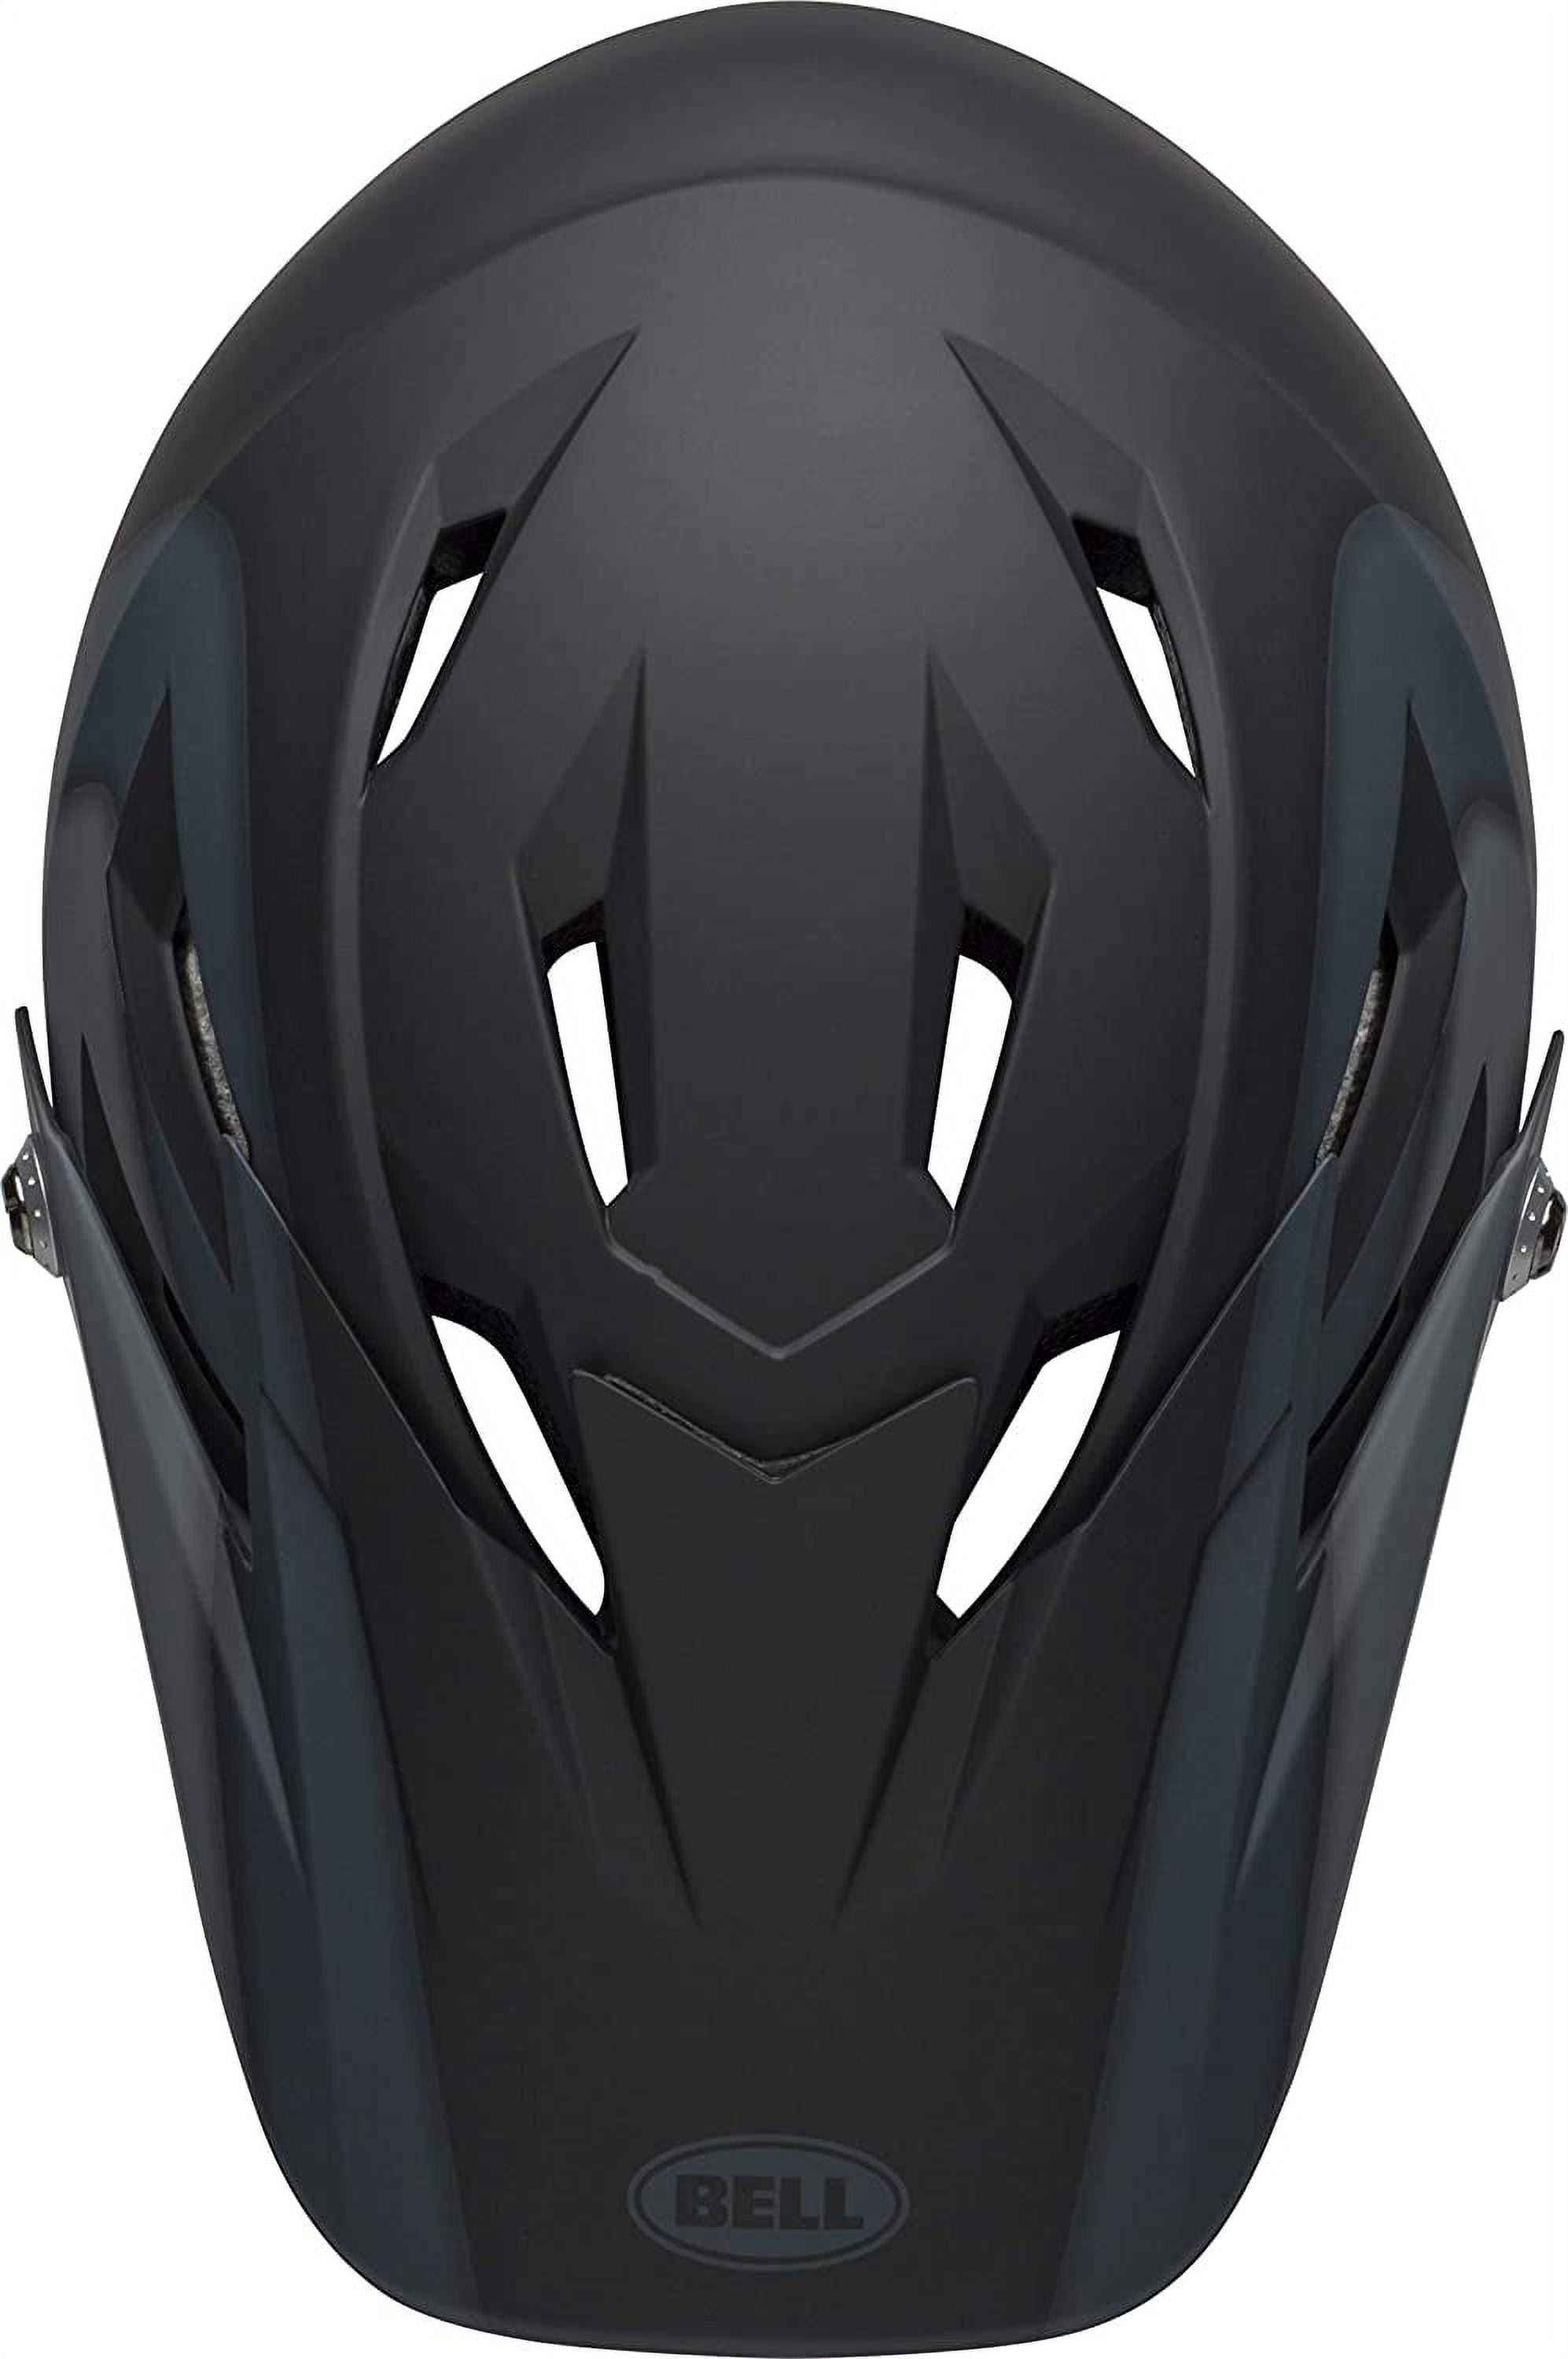 Bell Sanction Adult Premium Lightweight and Durable Full-Face Bike Helmet